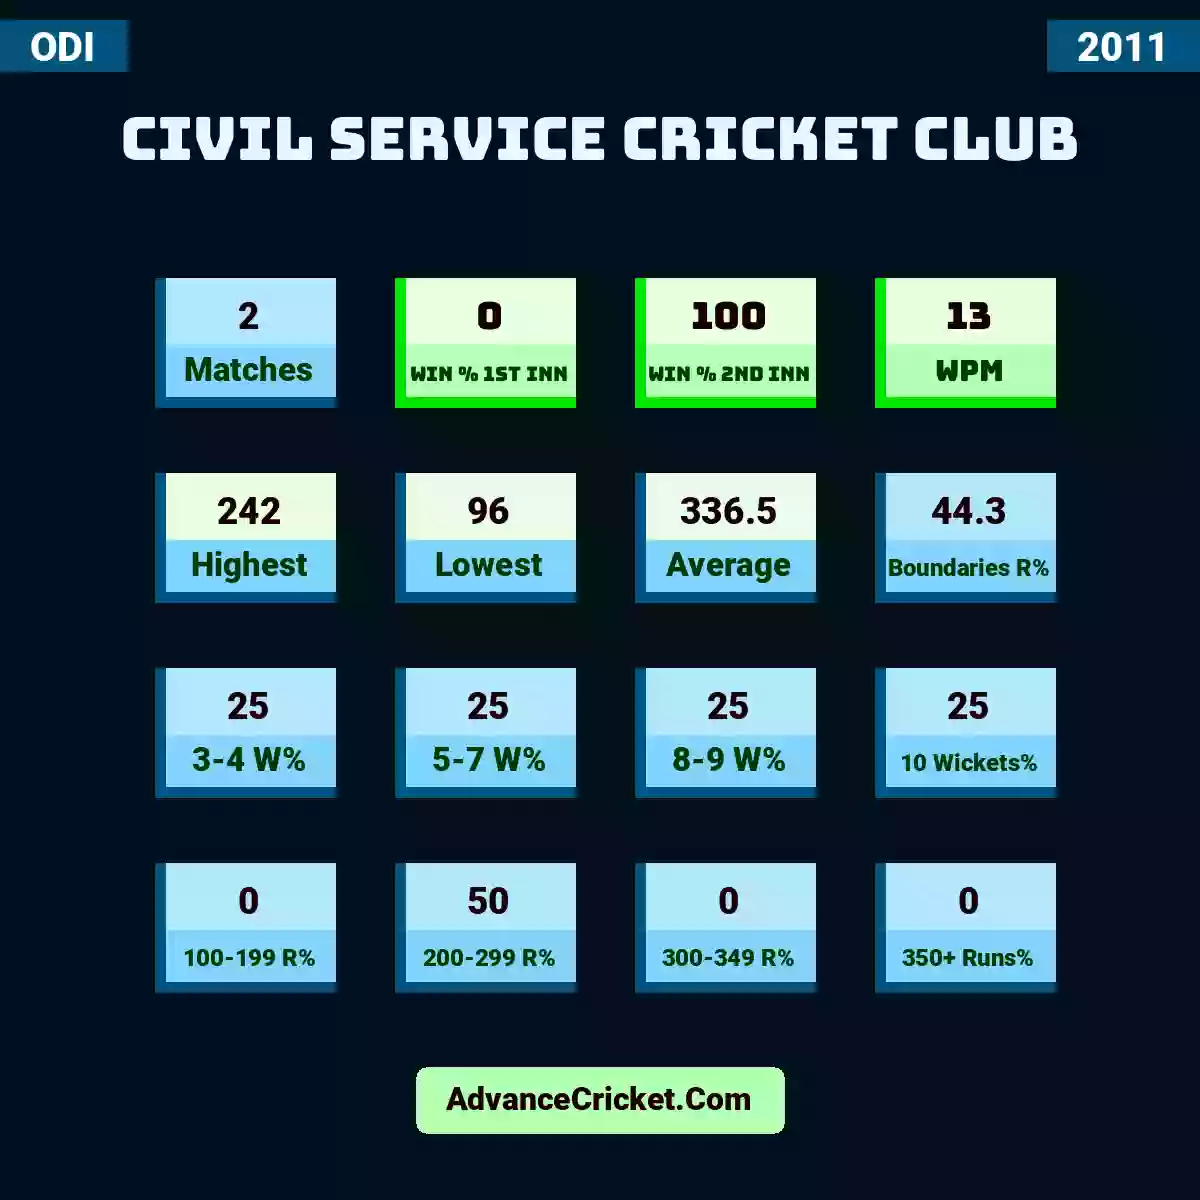 Image showing Civil Service Cricket Club with Matches: 2, Win % 1st Inn: 0, Win % 2nd Inn: 100, WPM: 13, Highest: 242, Lowest: 96, Average: 336.5, Boundaries R%: 44.3, 3-4 W%: 25, 5-7 W%: 25, 8-9 W%: 25, 10 Wickets%: 25, 100-199 R%: 0, 200-299 R%: 50, 300-349 R%: 0, 350+ Runs%: 0.